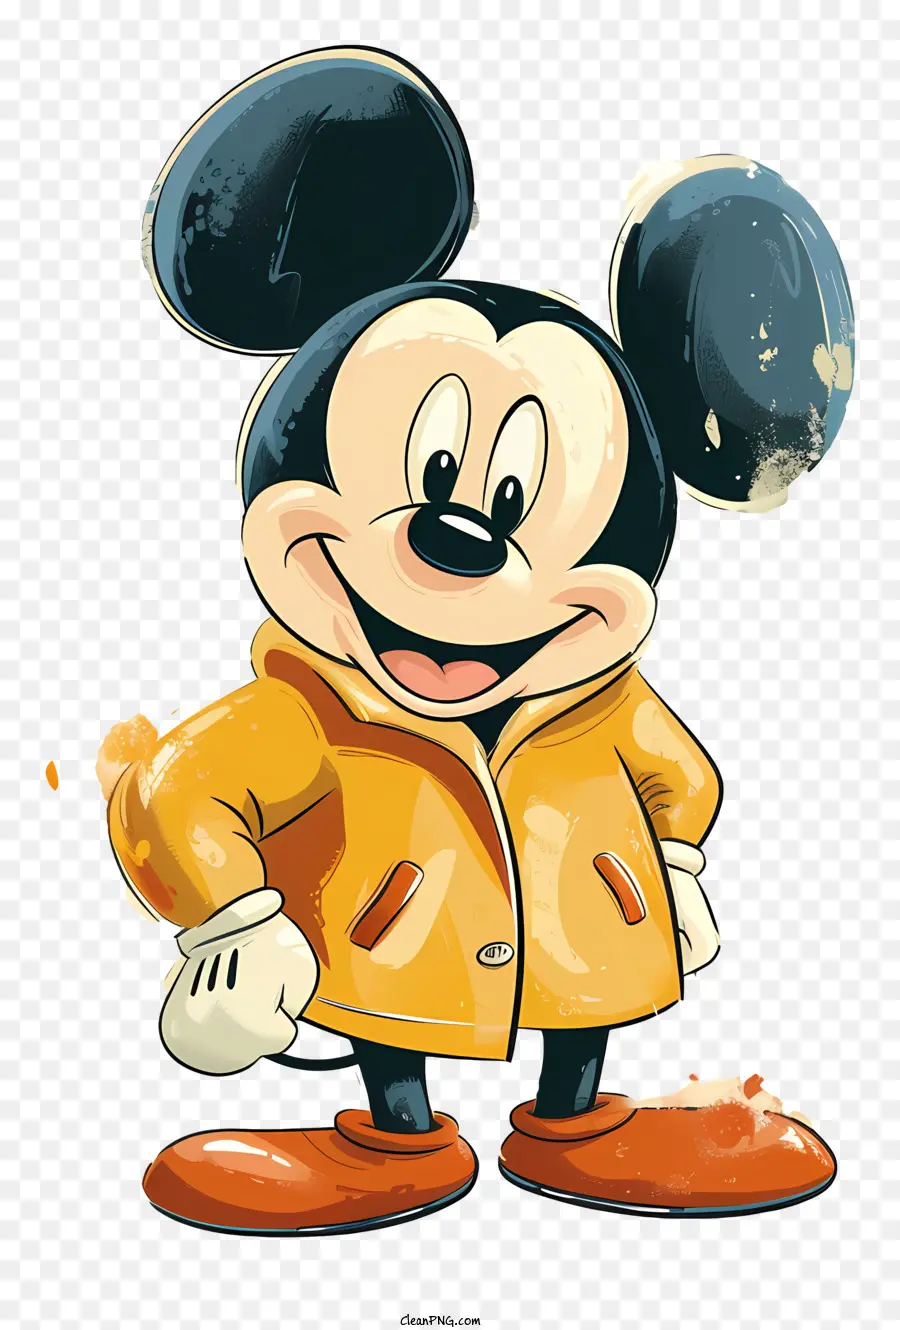 mickey Maus - Cartooncharakter in Orangenmantel mit Mikrofon